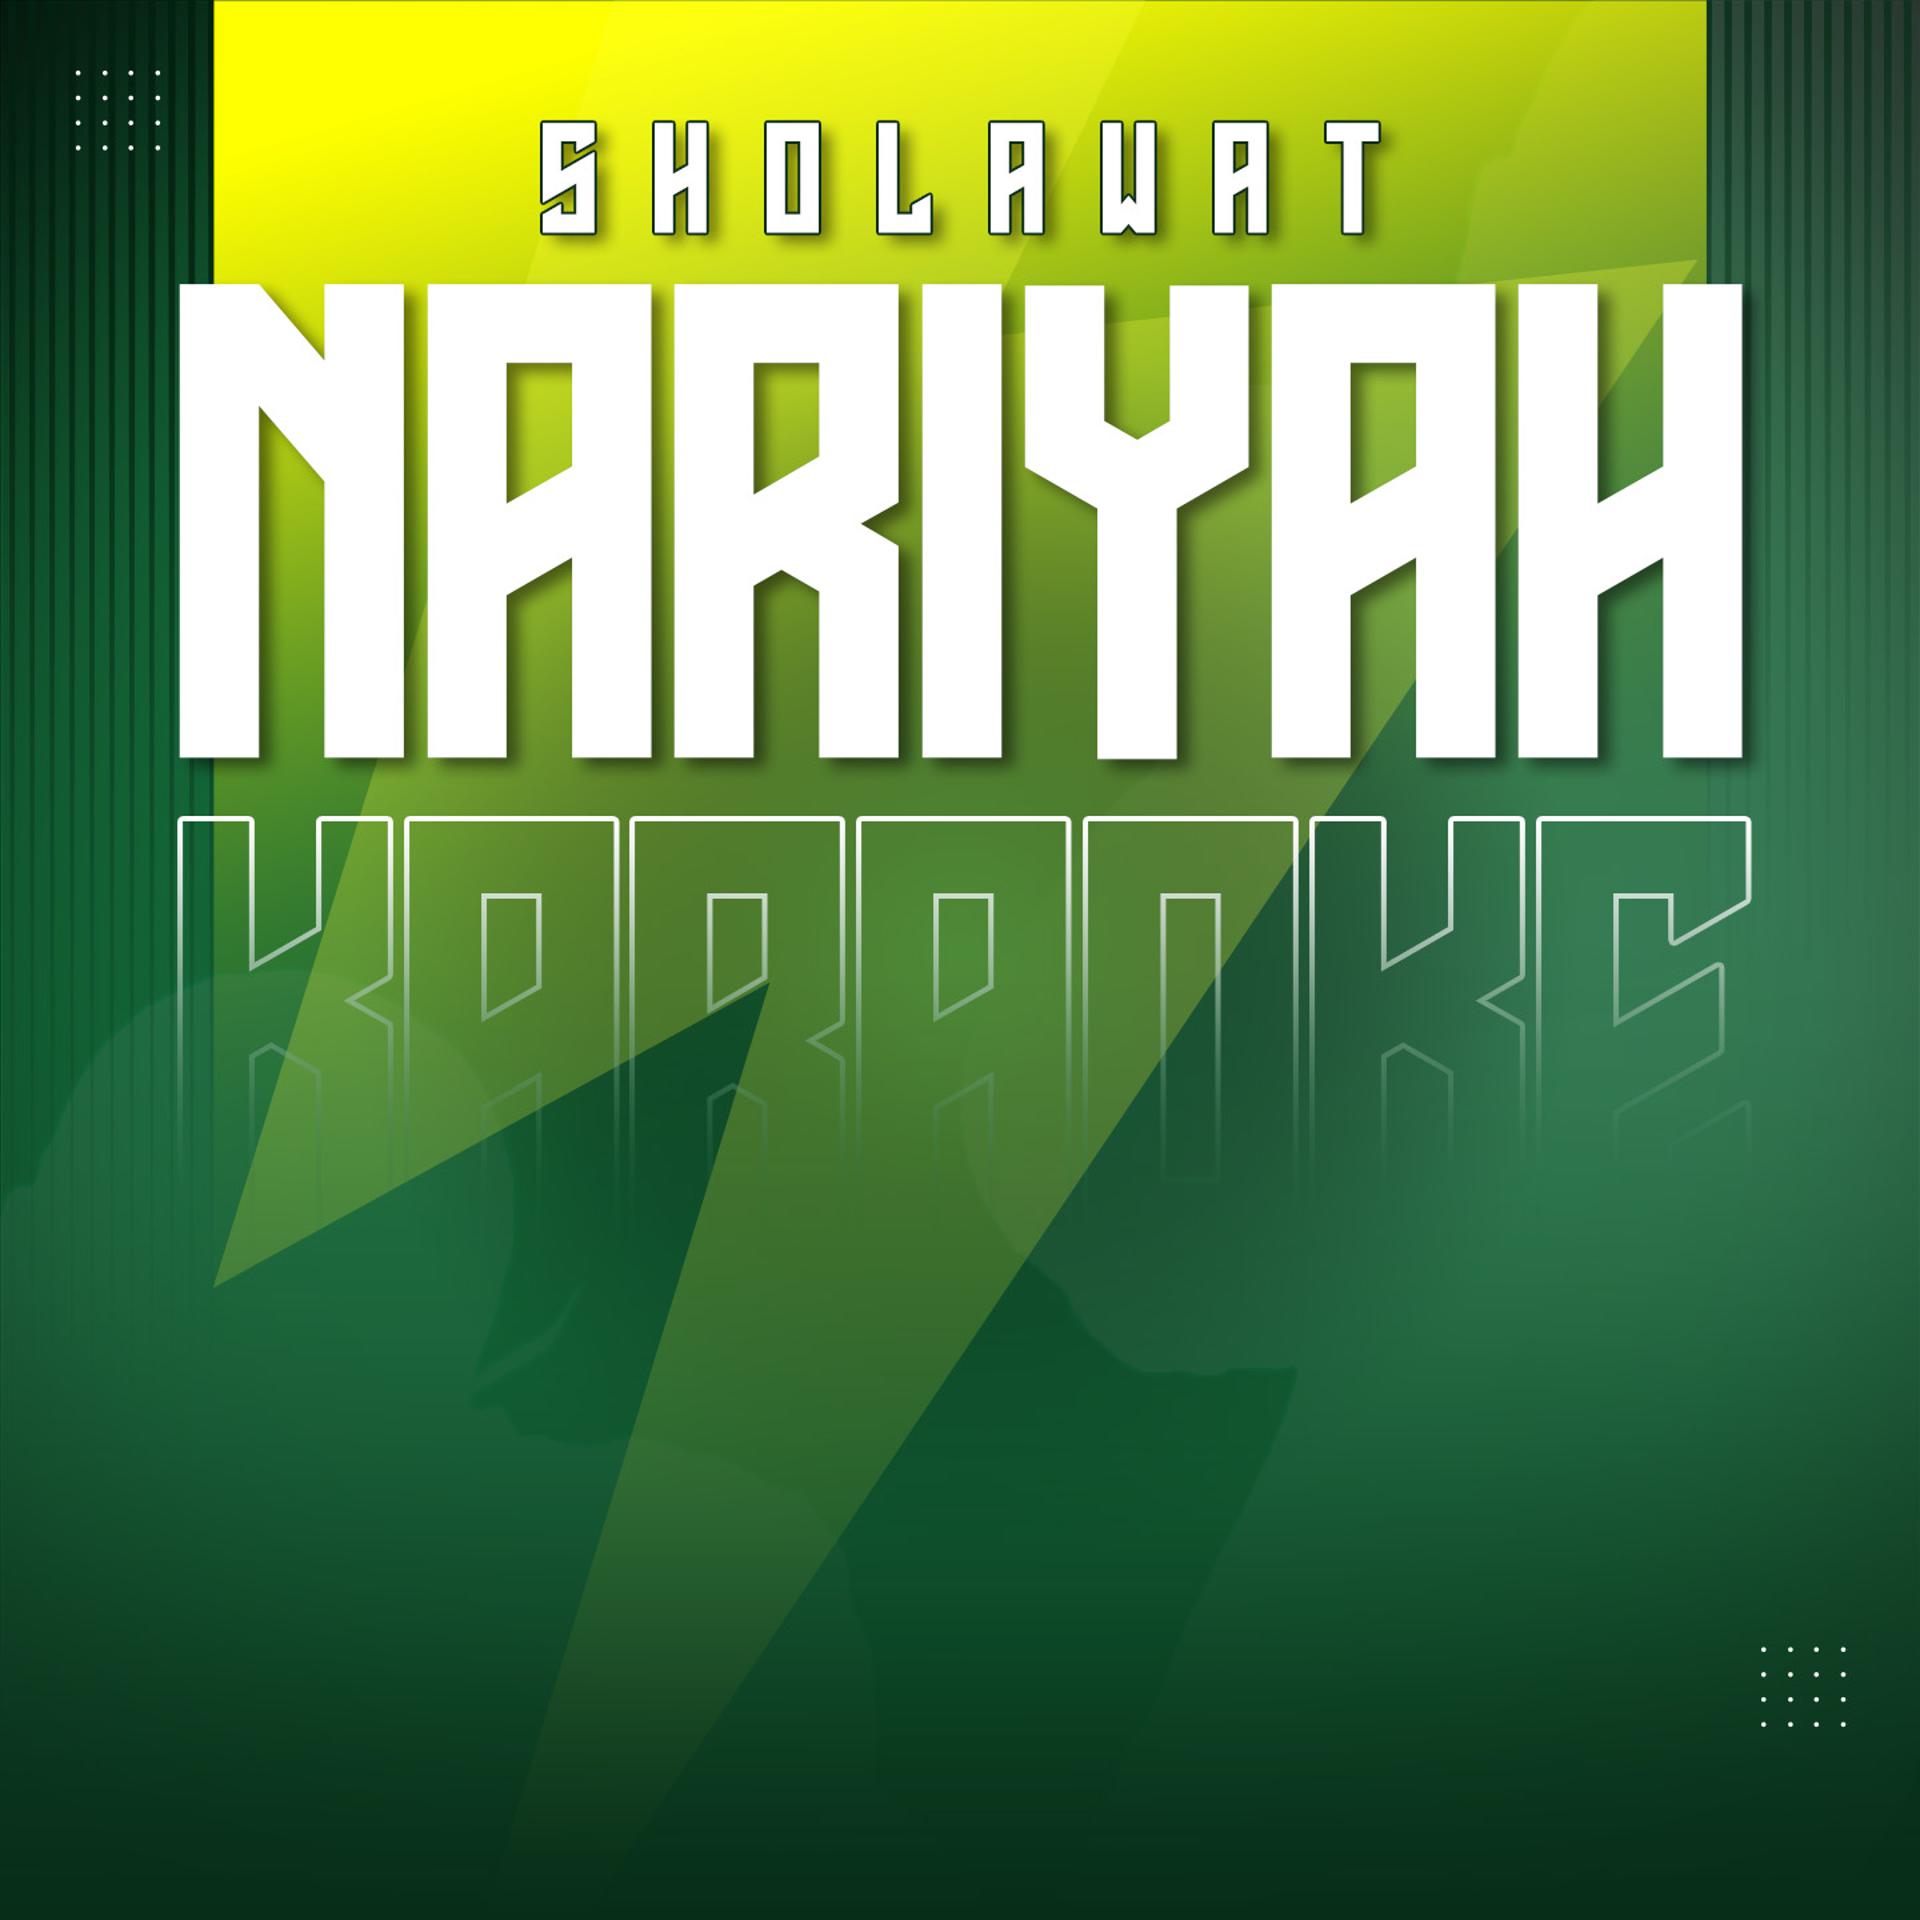 Постер альбома Sholawat Nariyah